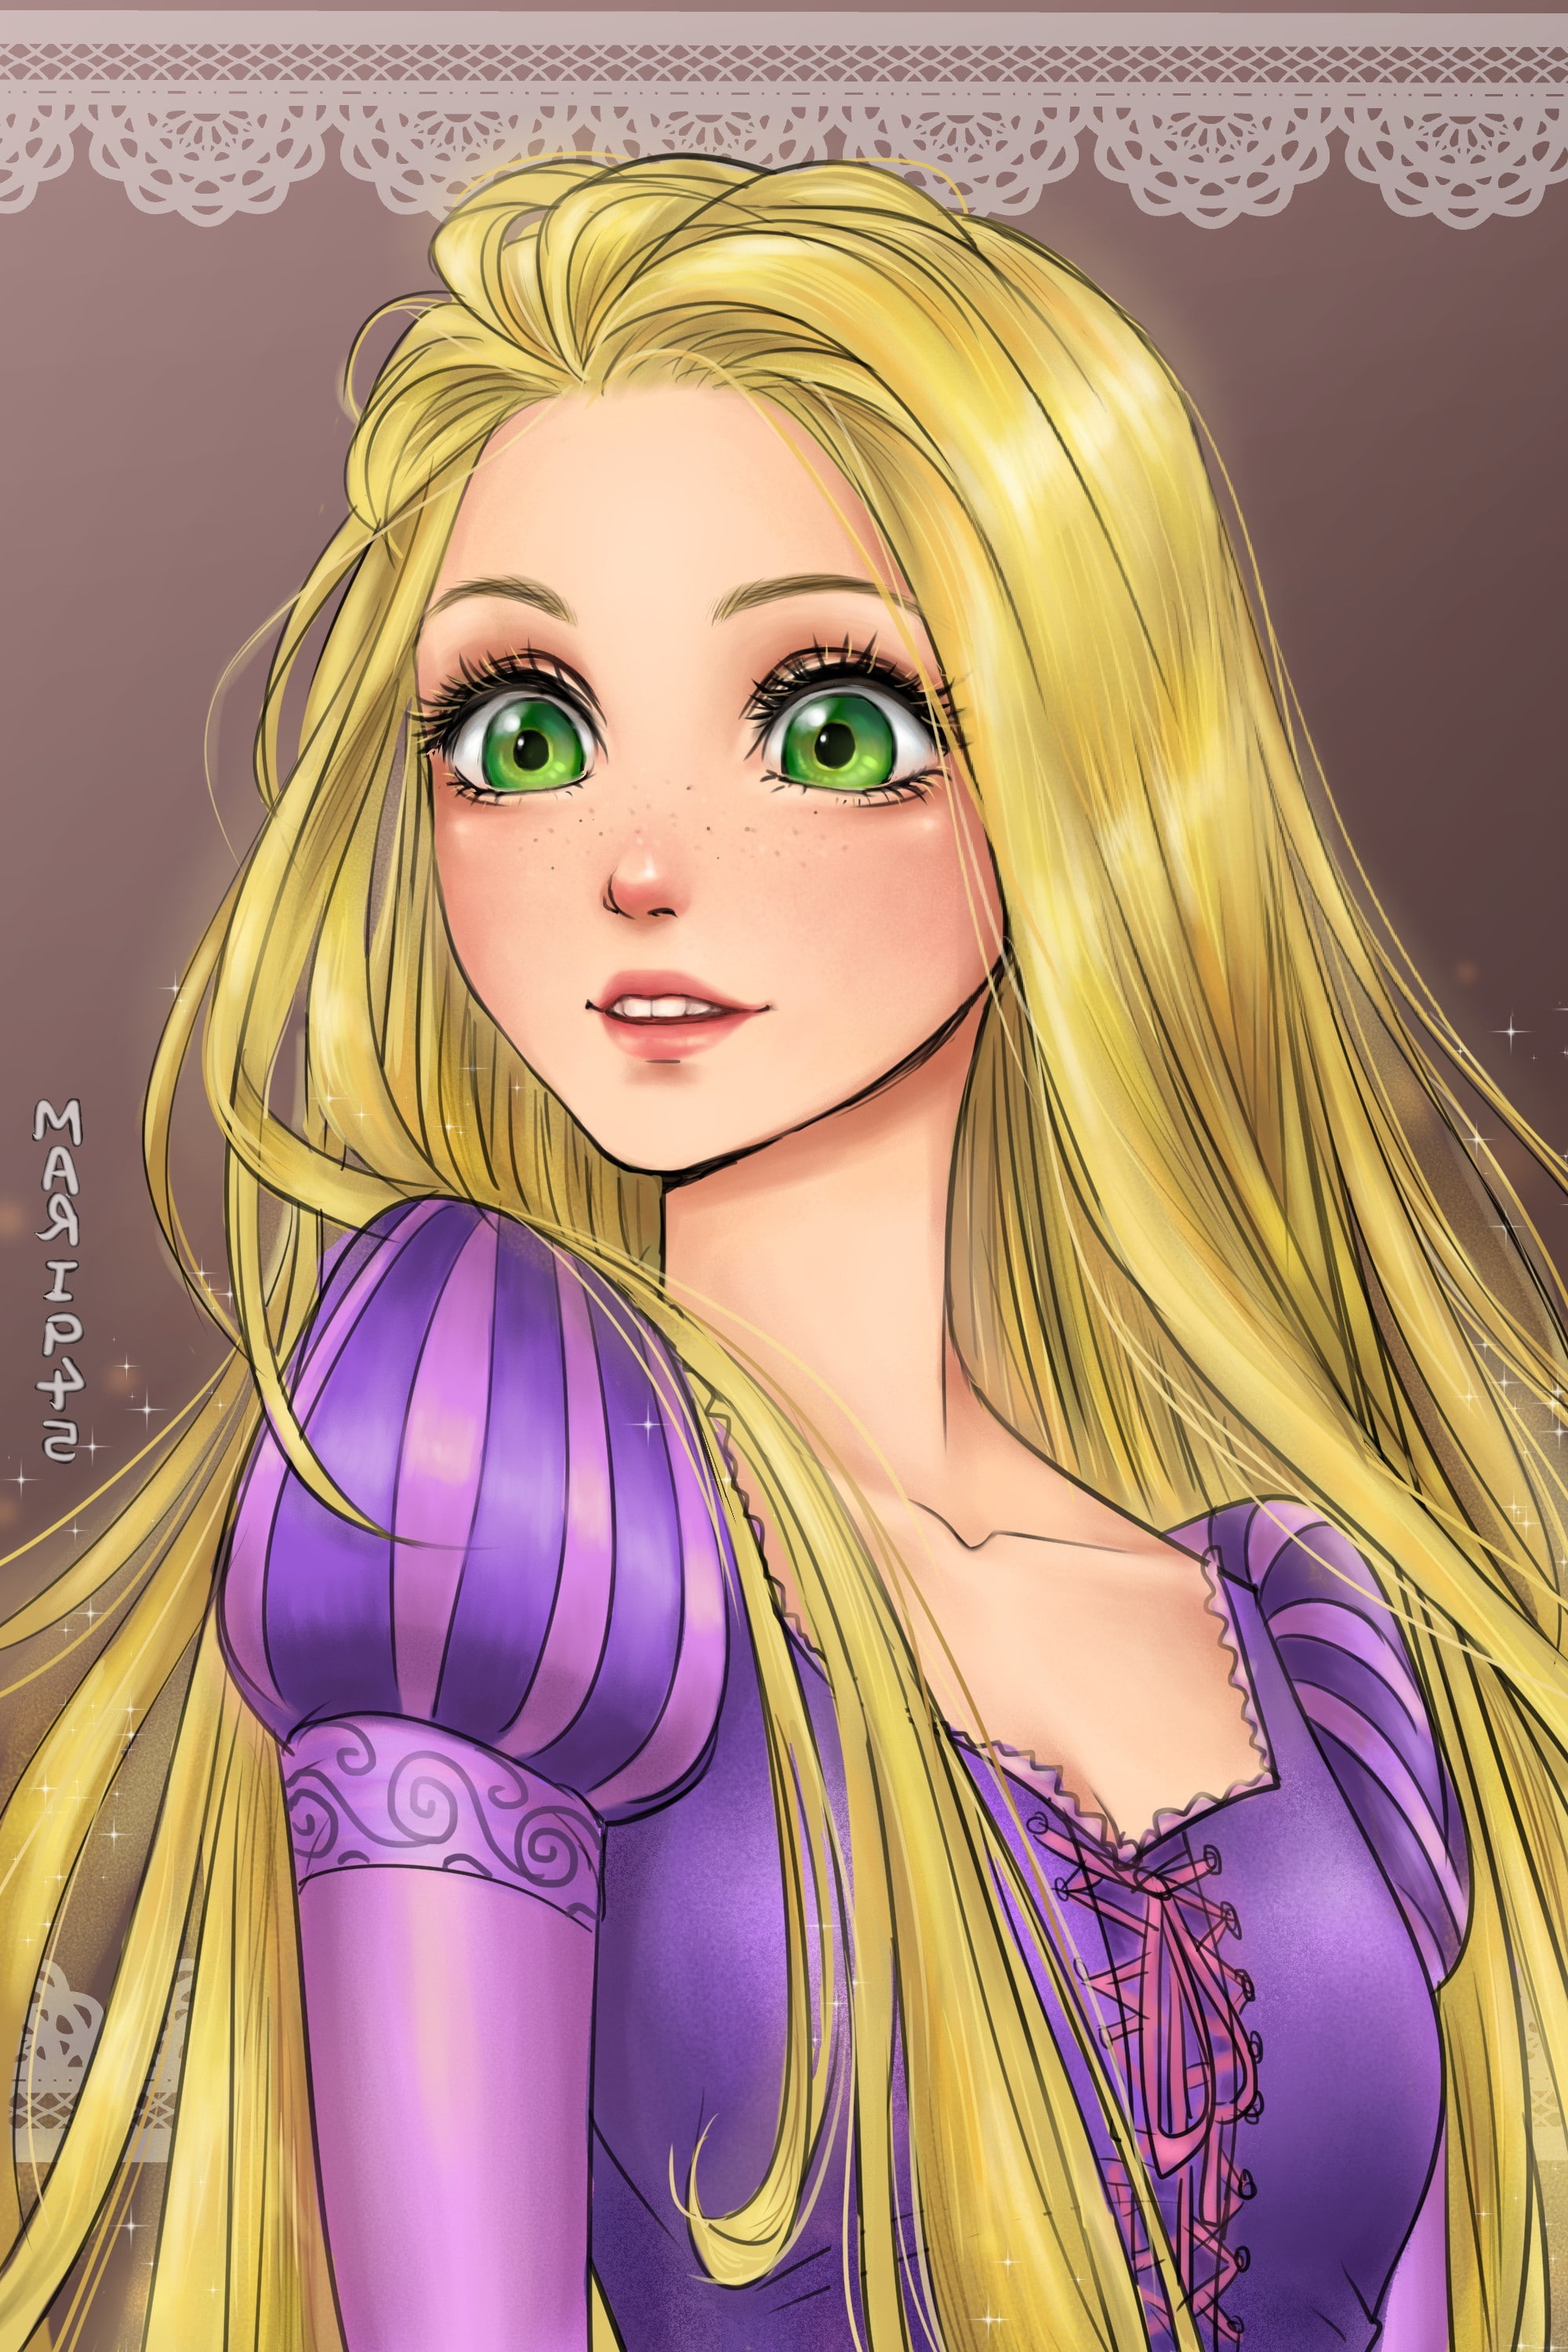 rapunzel blonde women green eyes long hair dress pink purple fantasy art